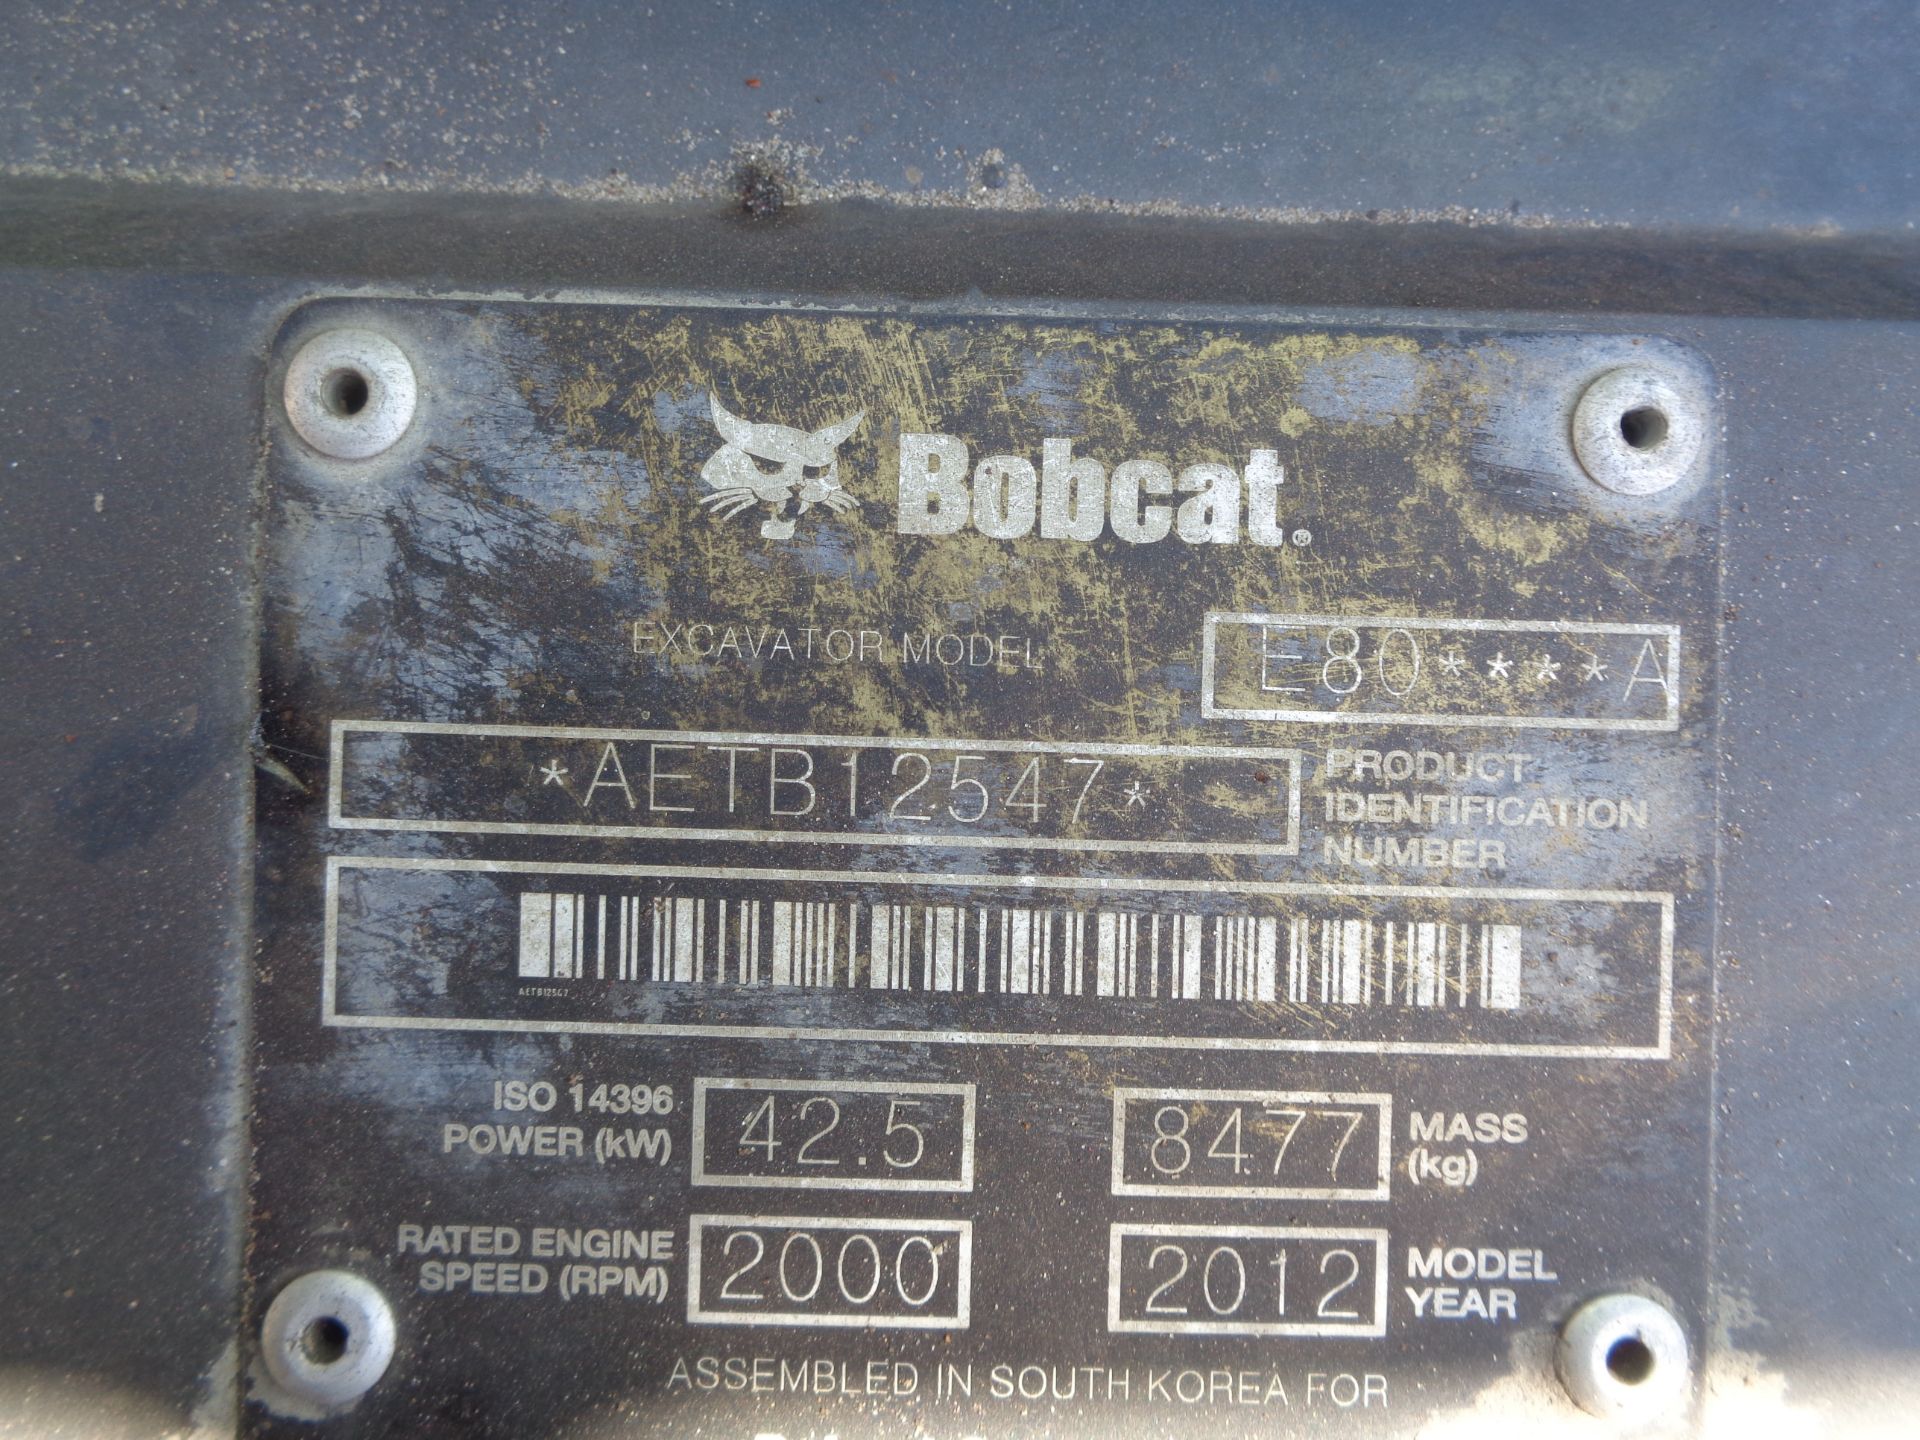 2012 Bobcat E80 Midi Excavator - Image 24 of 24